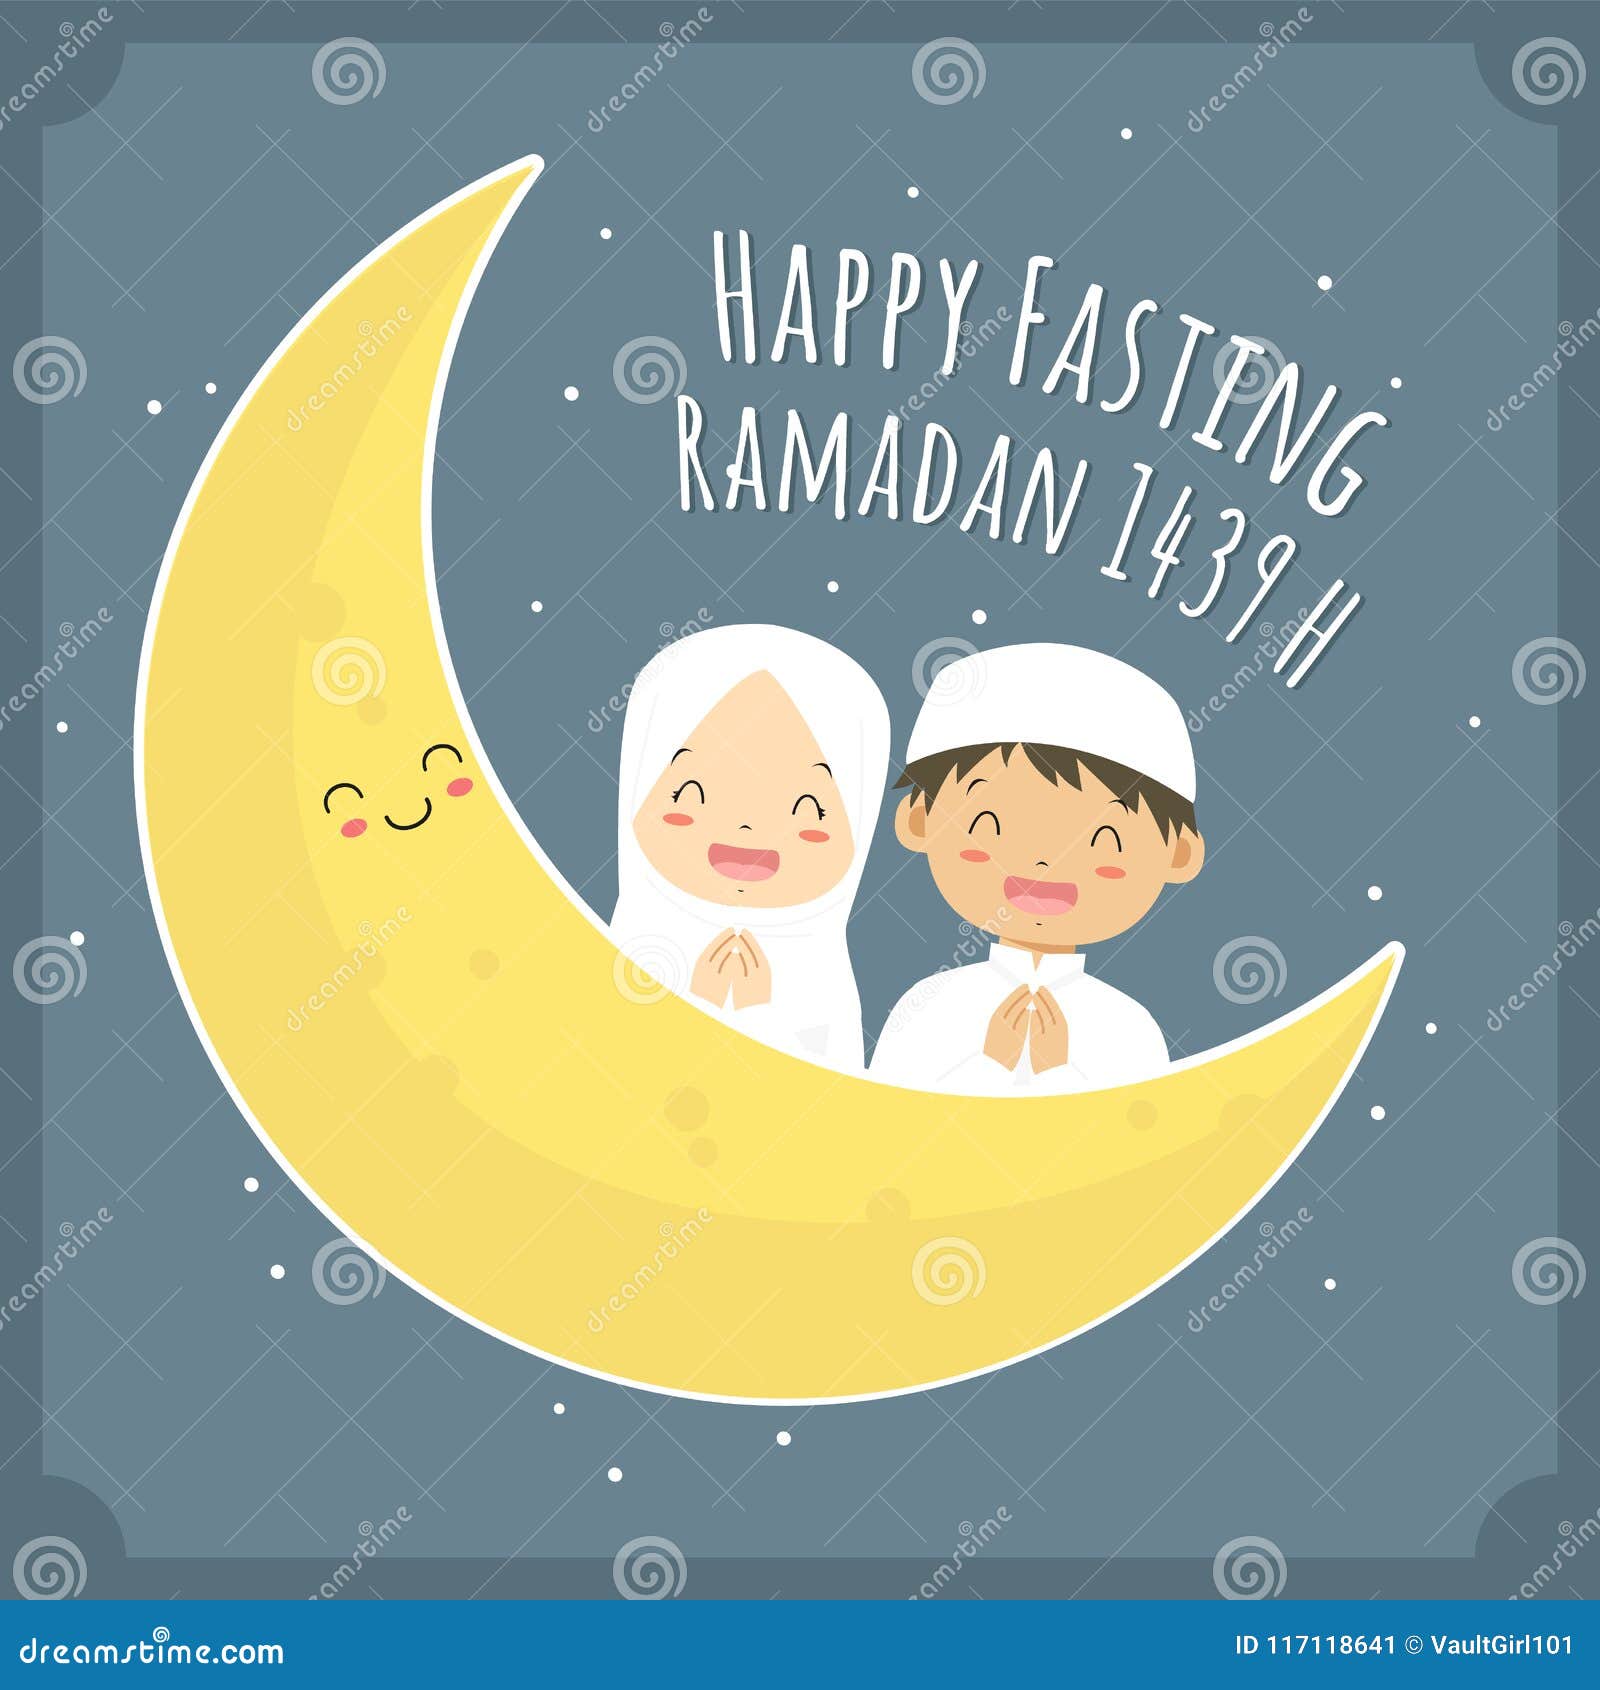 happy fasting greeting card, muslim children and moon cartoon 